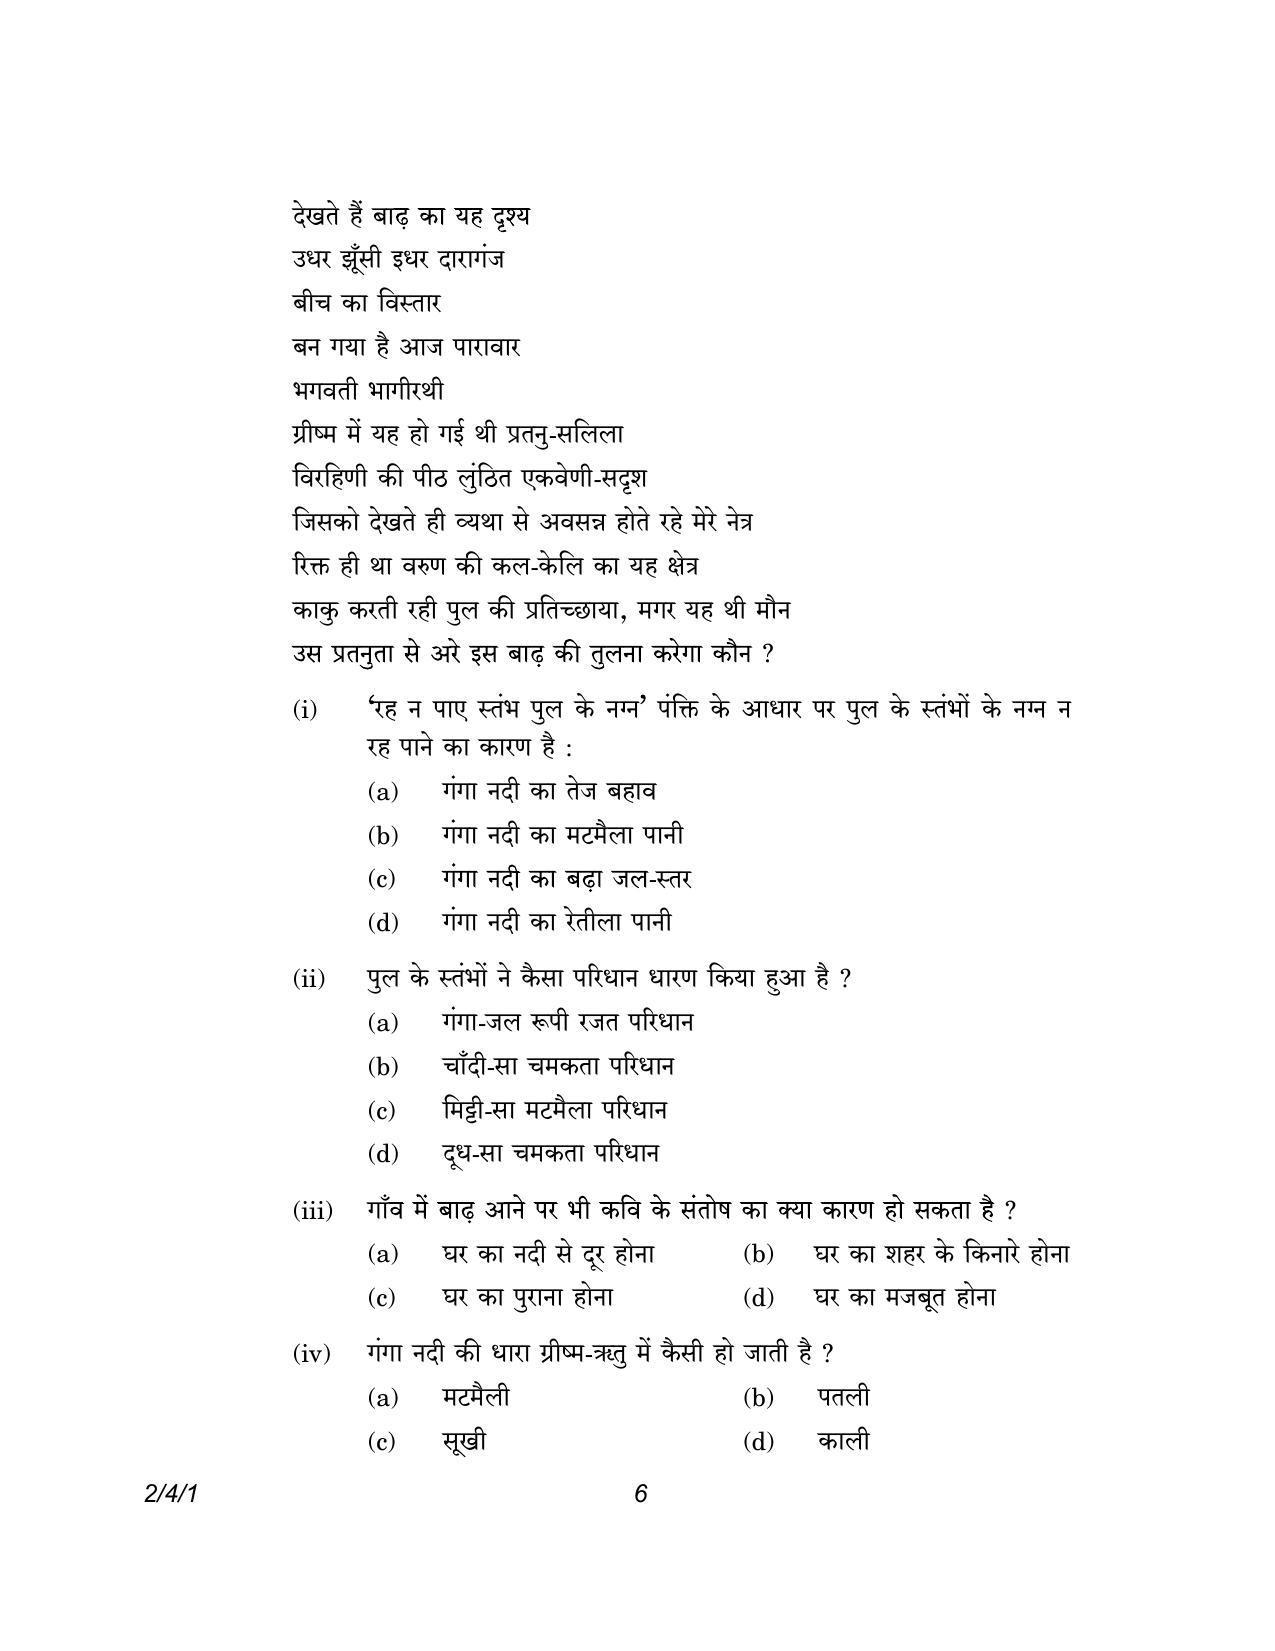 CBSE Class 12 2-4-1 Hindi Core version 2023 Question Paper - Page 6